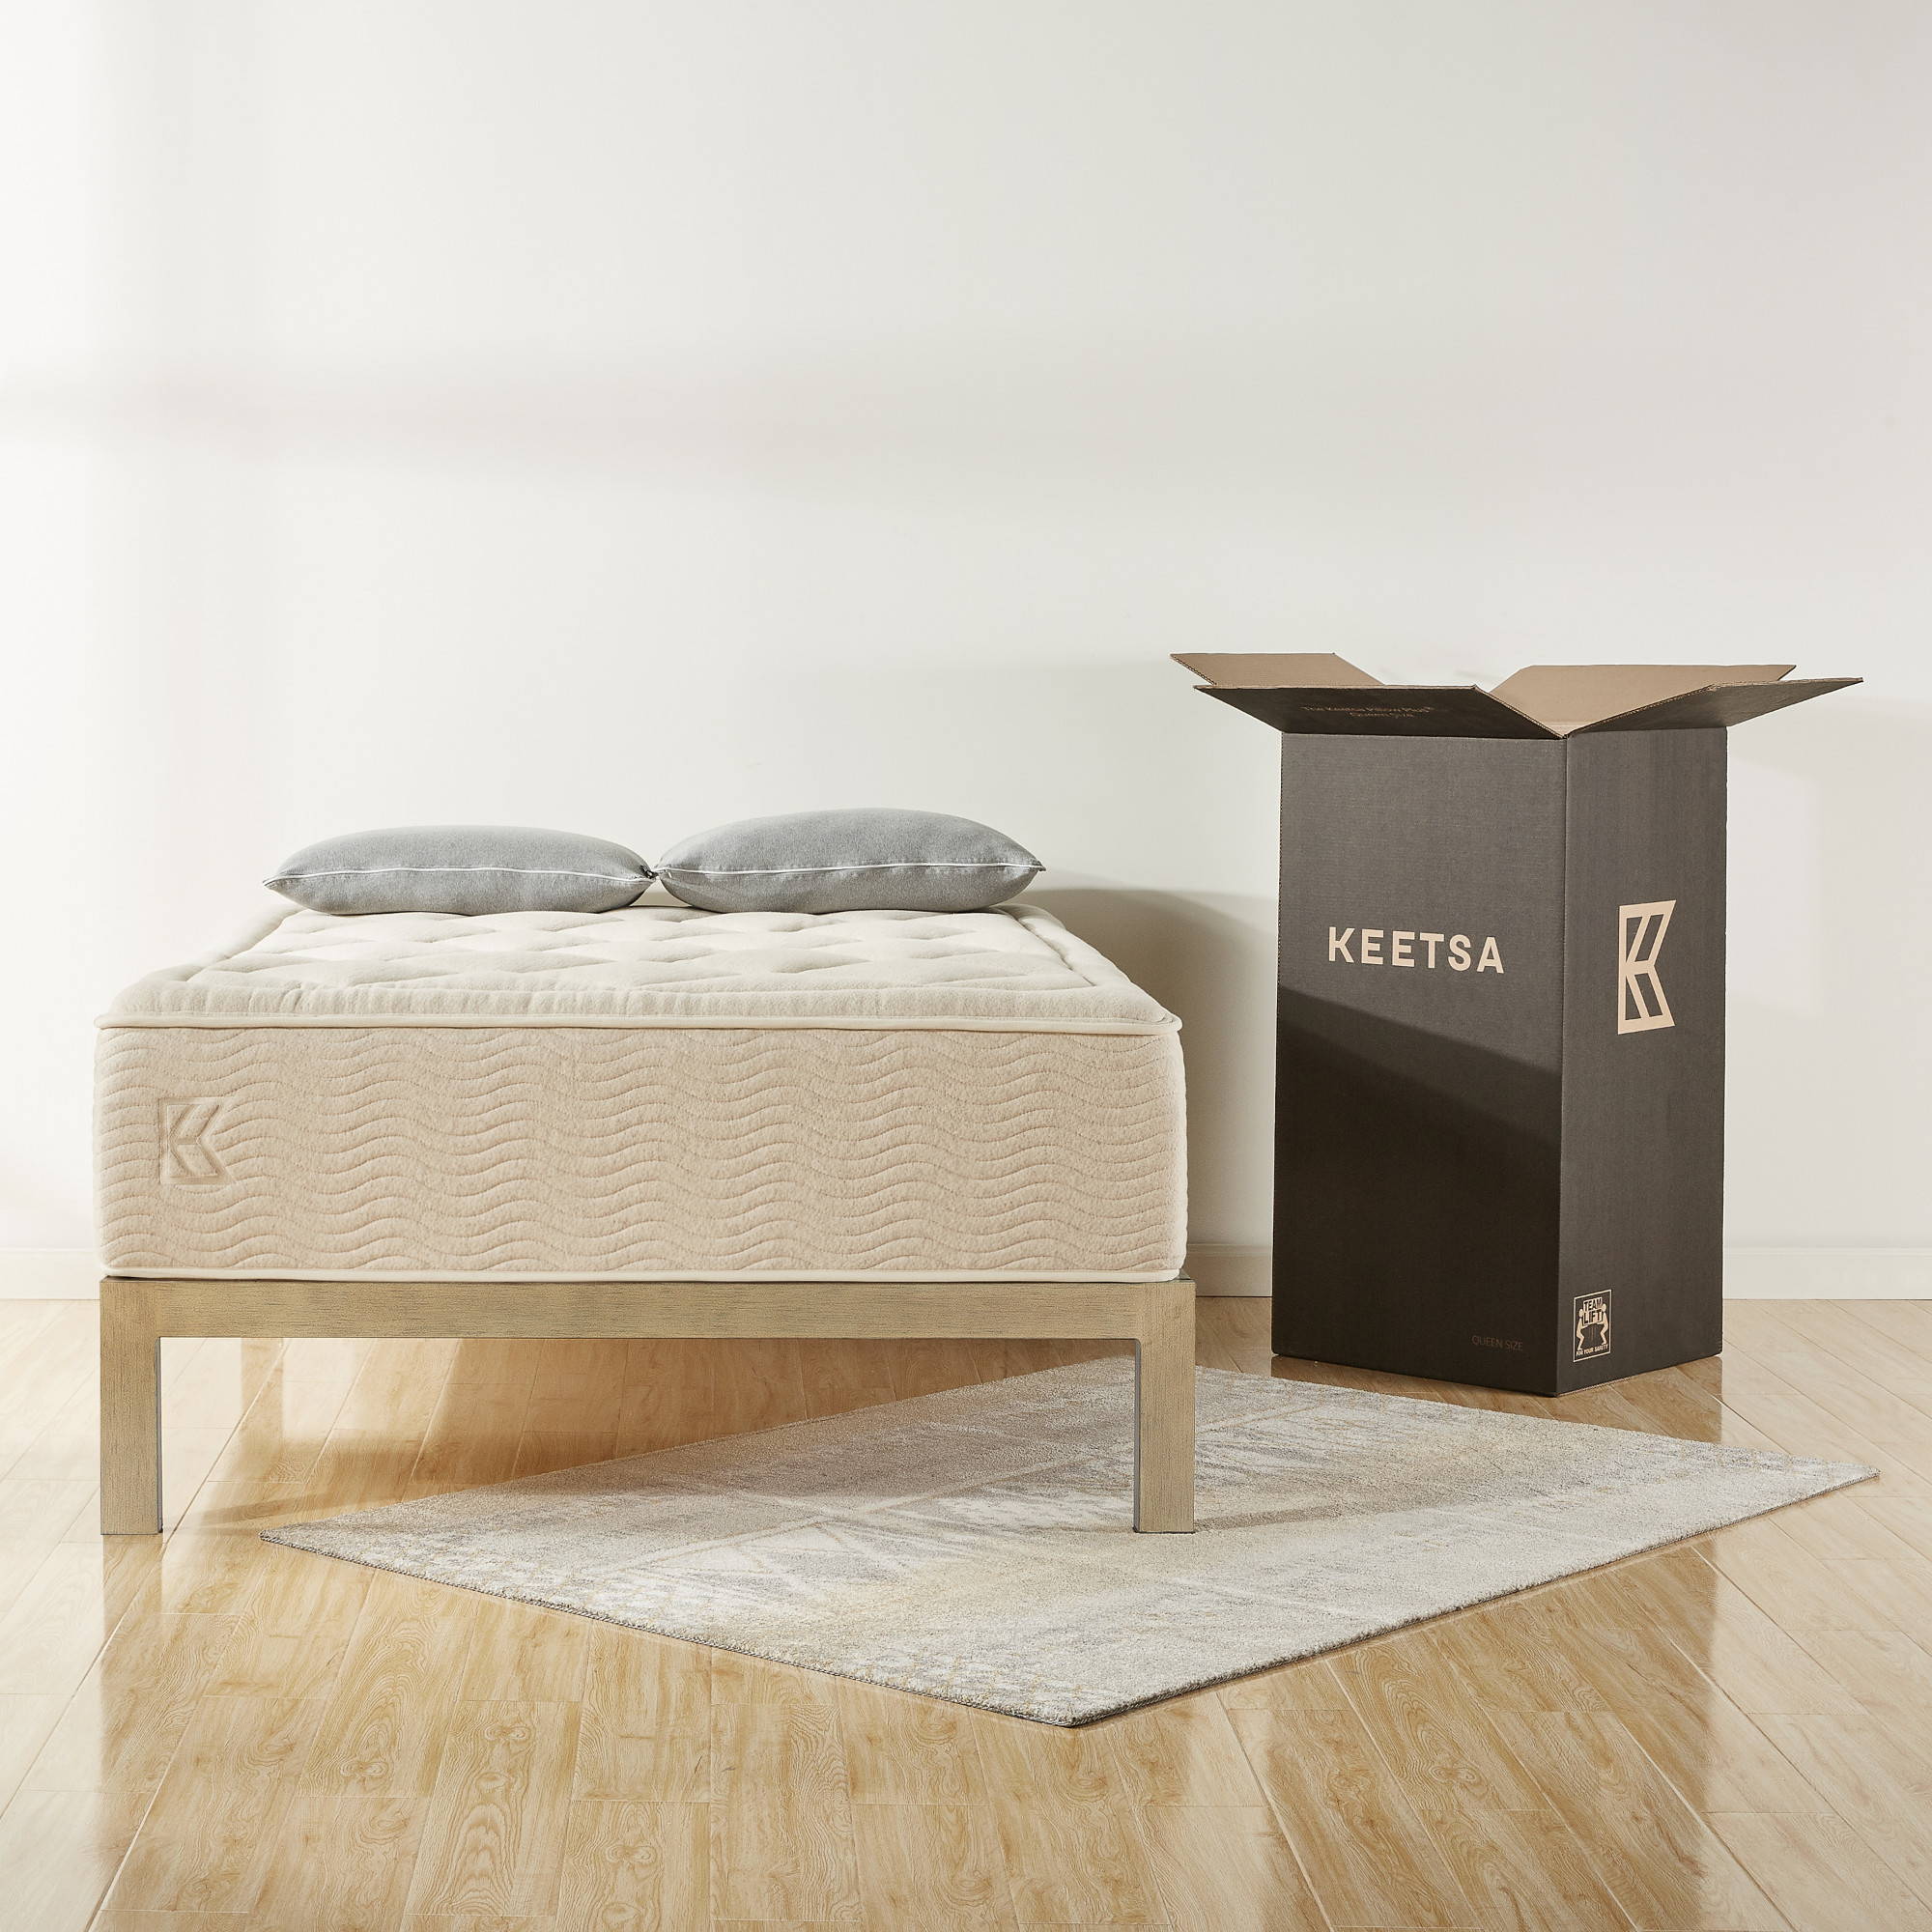 The Keetsa Pillow Plus Mattress in bedroom.